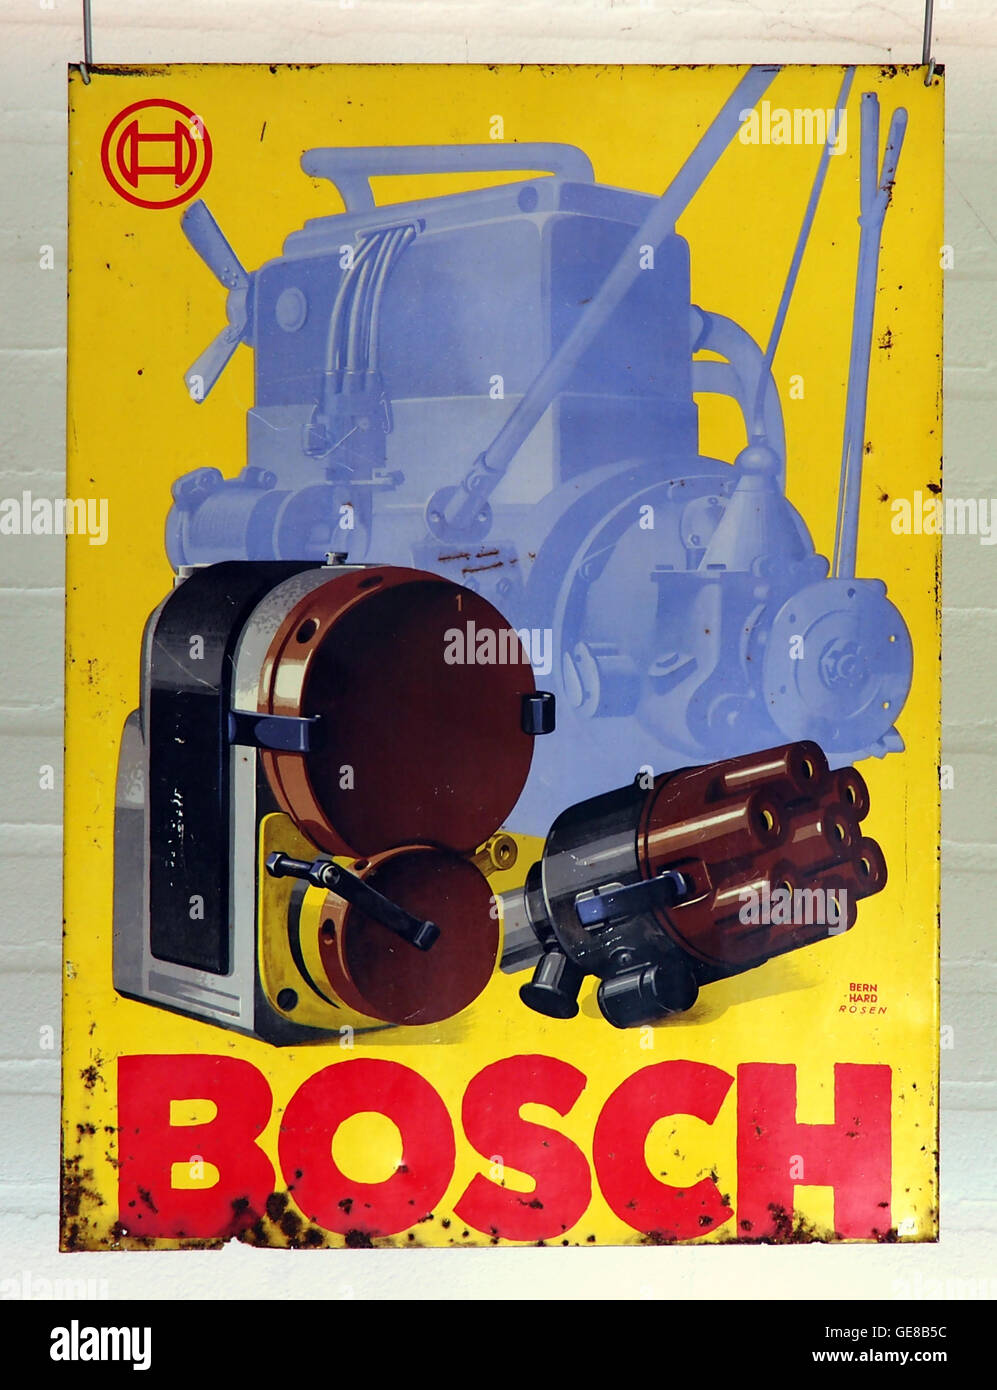 Bosch, enamel advertising sign Stock Photo